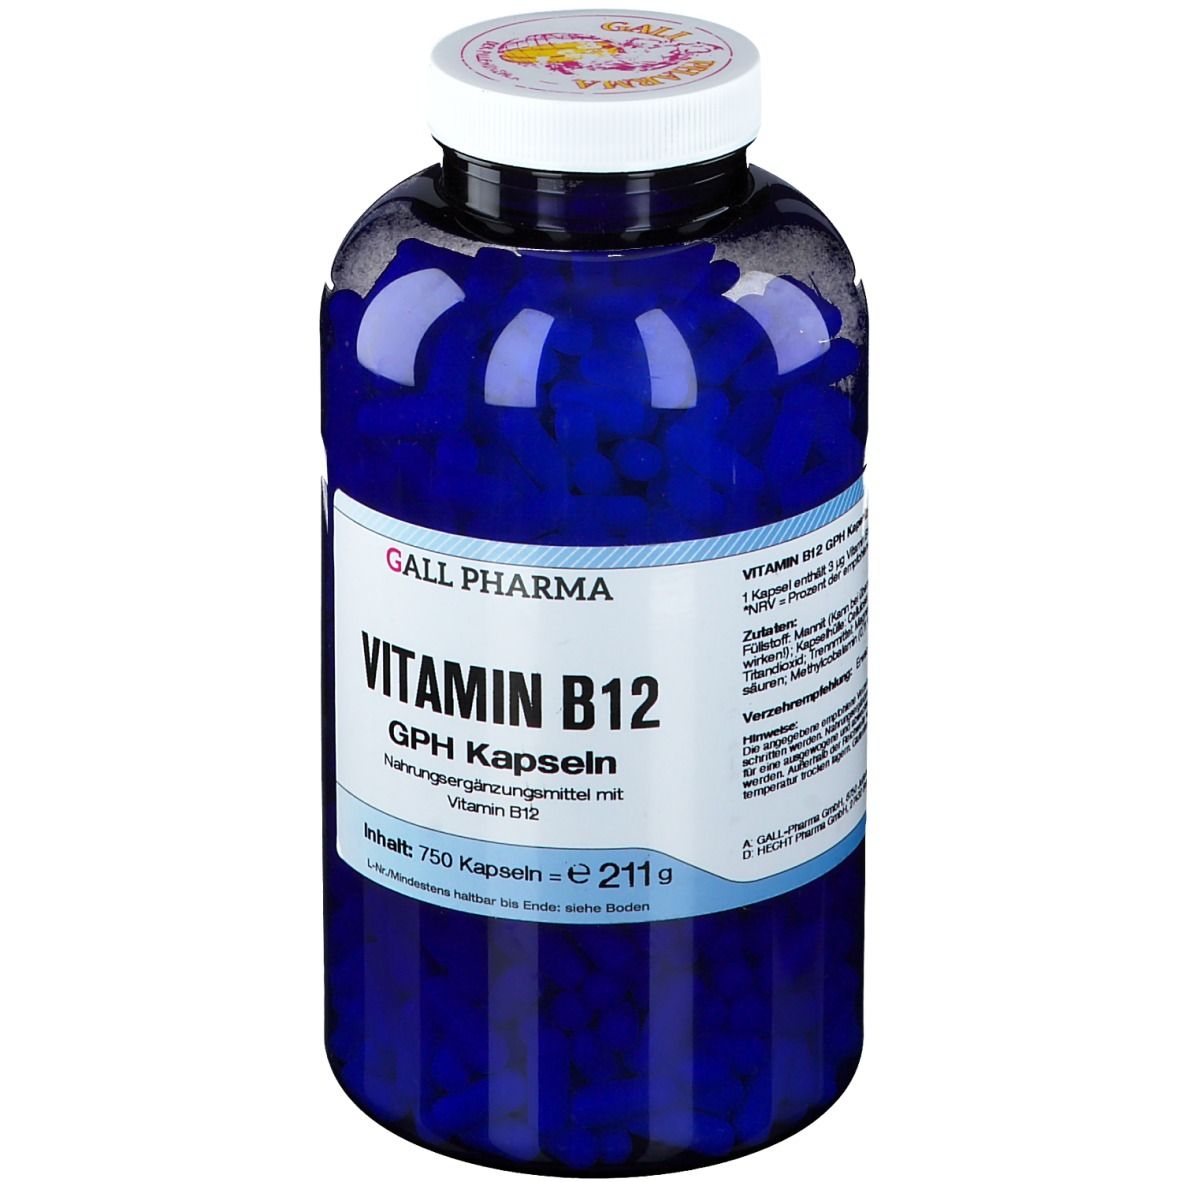 GALL PHARMA Vitamin B12 3 µg